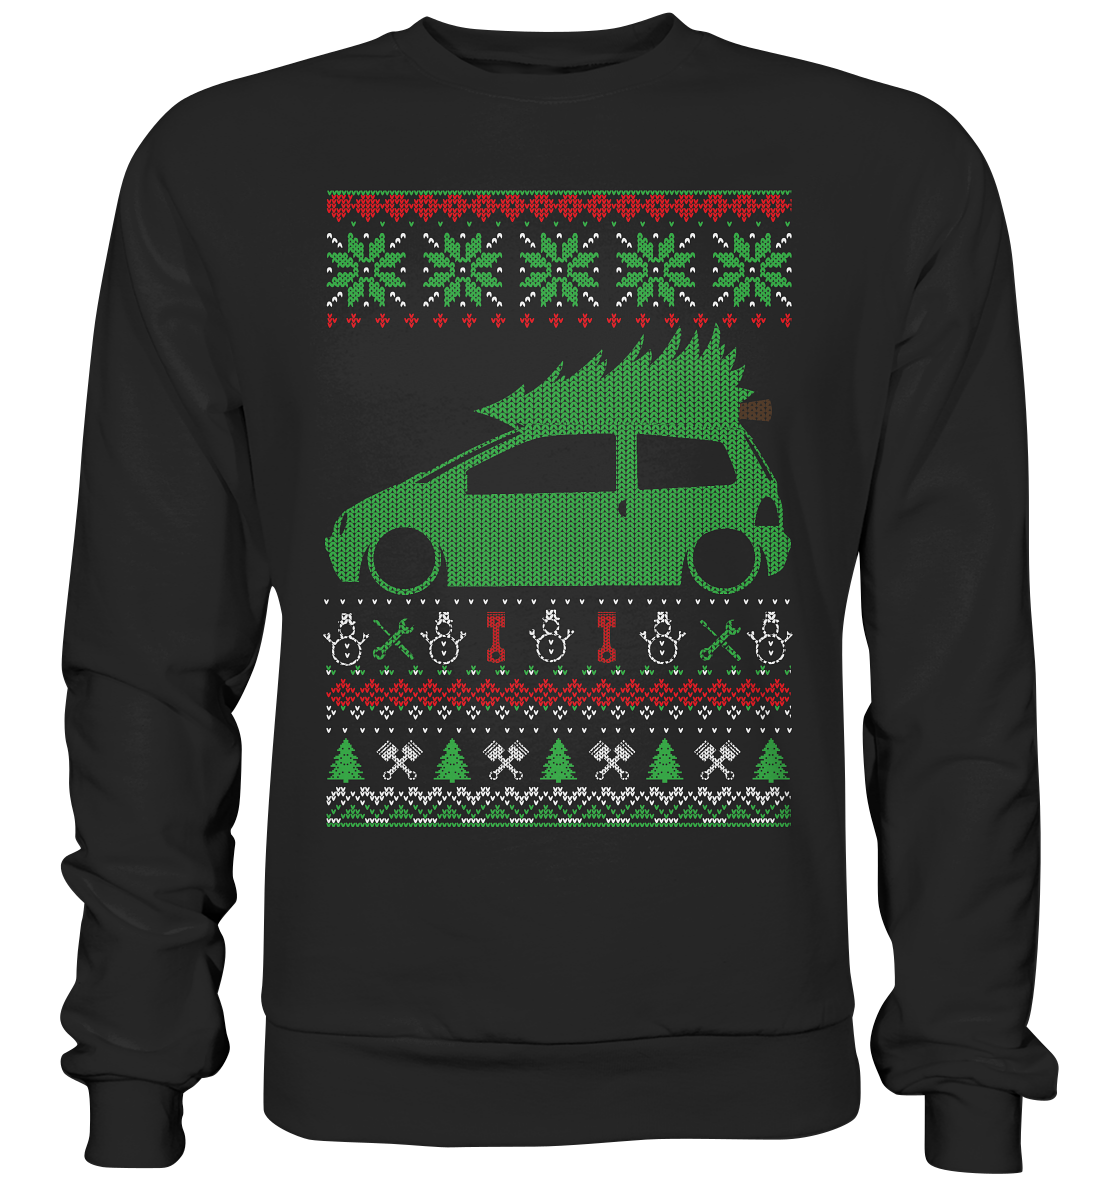 CODUGLY_RGKT - Premium Sweatshirt